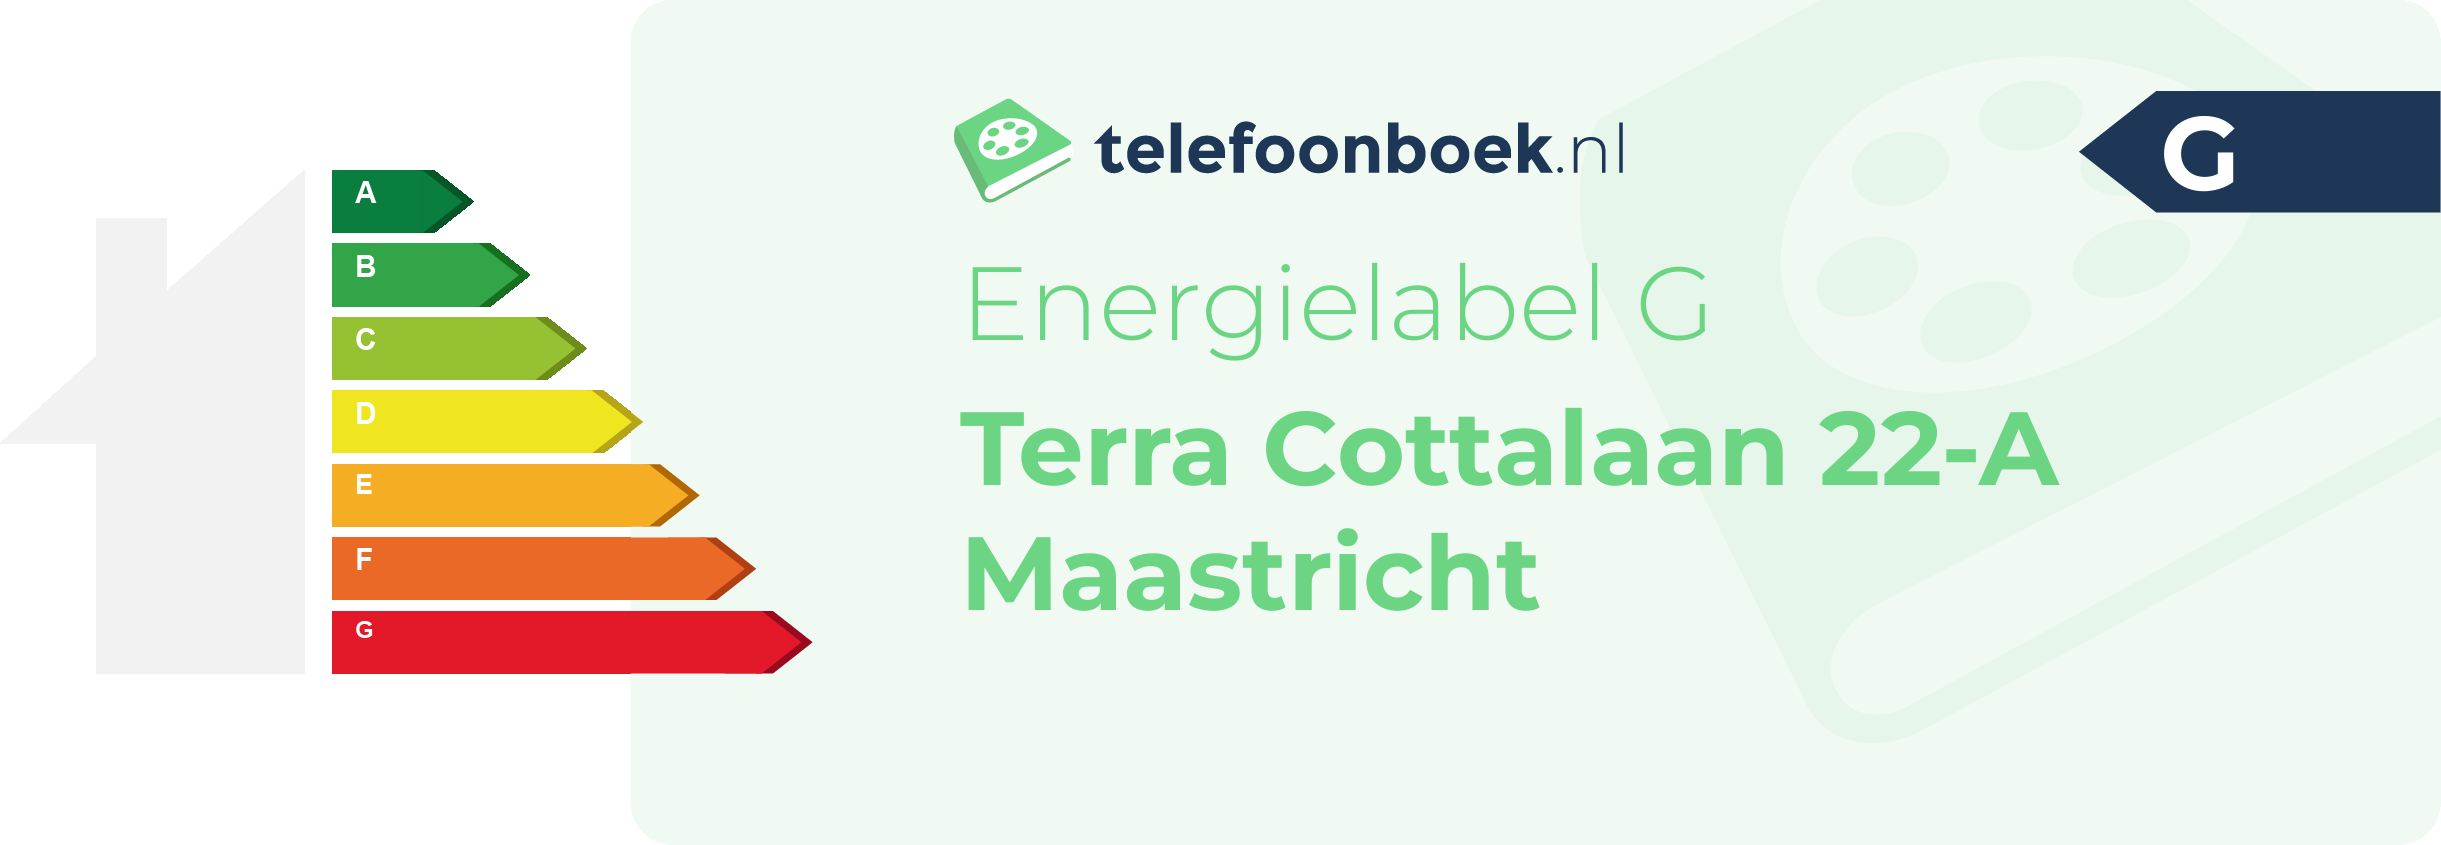 Energielabel Terra Cottalaan 22-A Maastricht